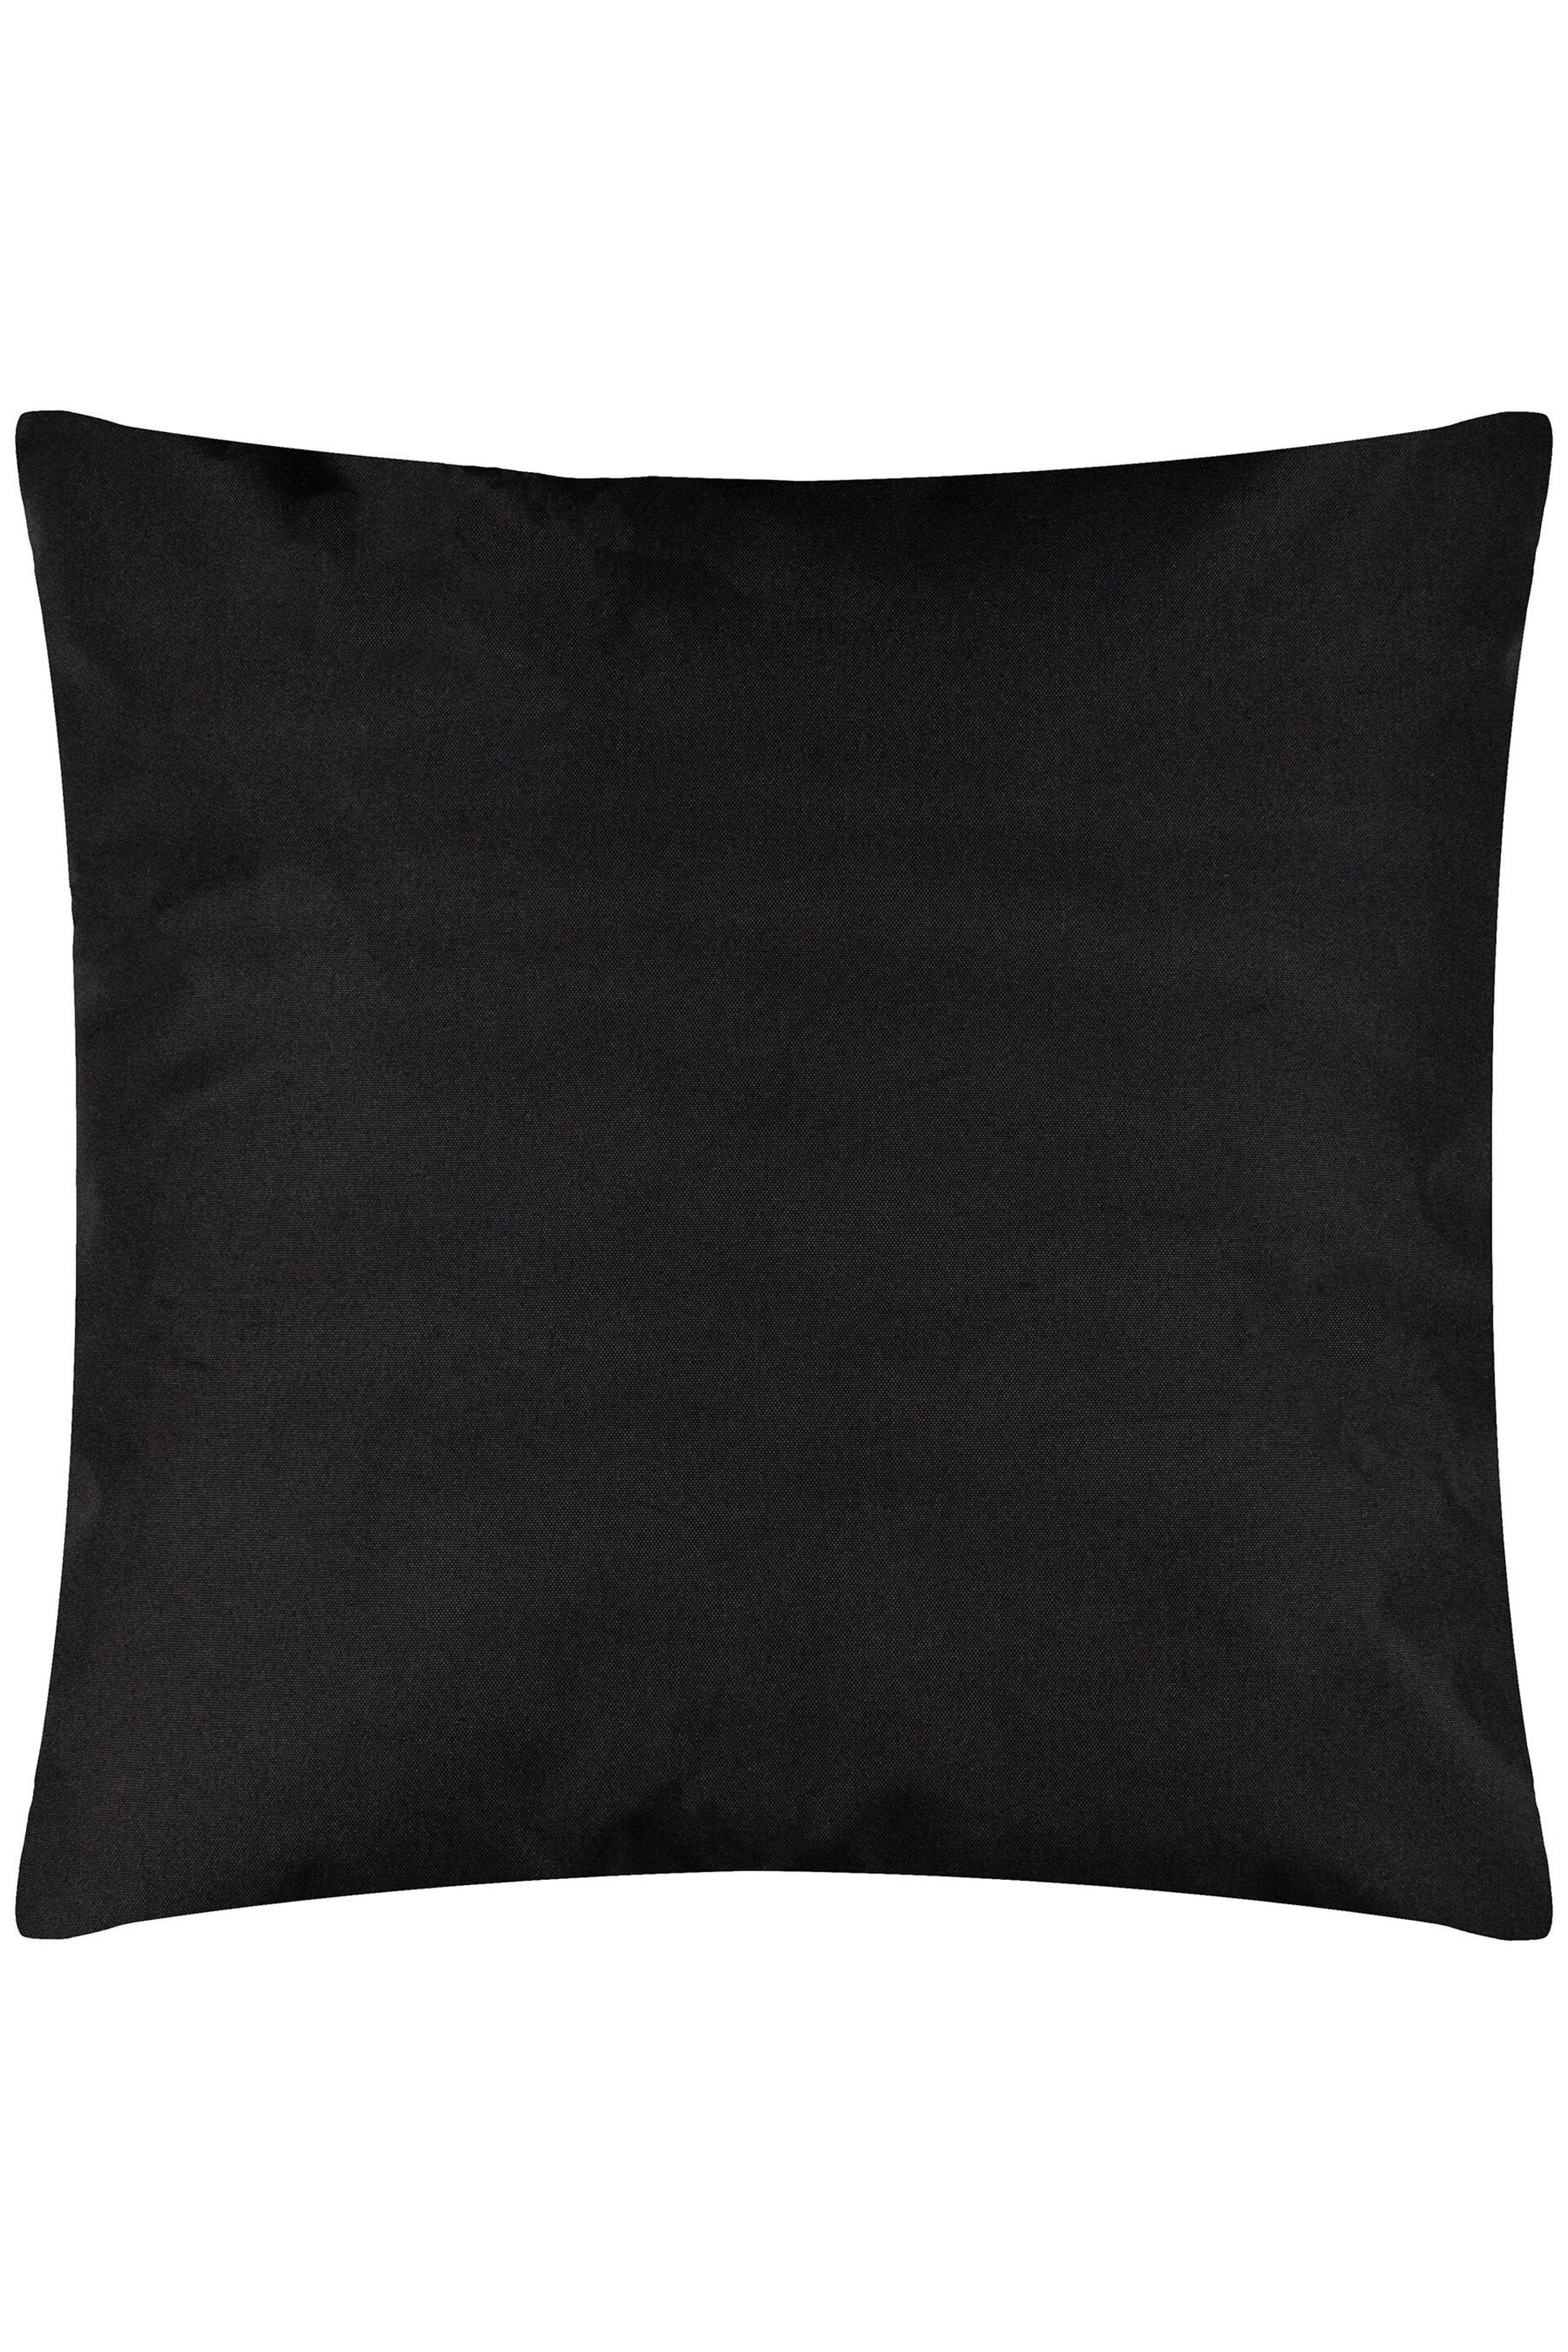 furn. Black Plain Large UV  Water Resistant Cushion - Image 2 of 4